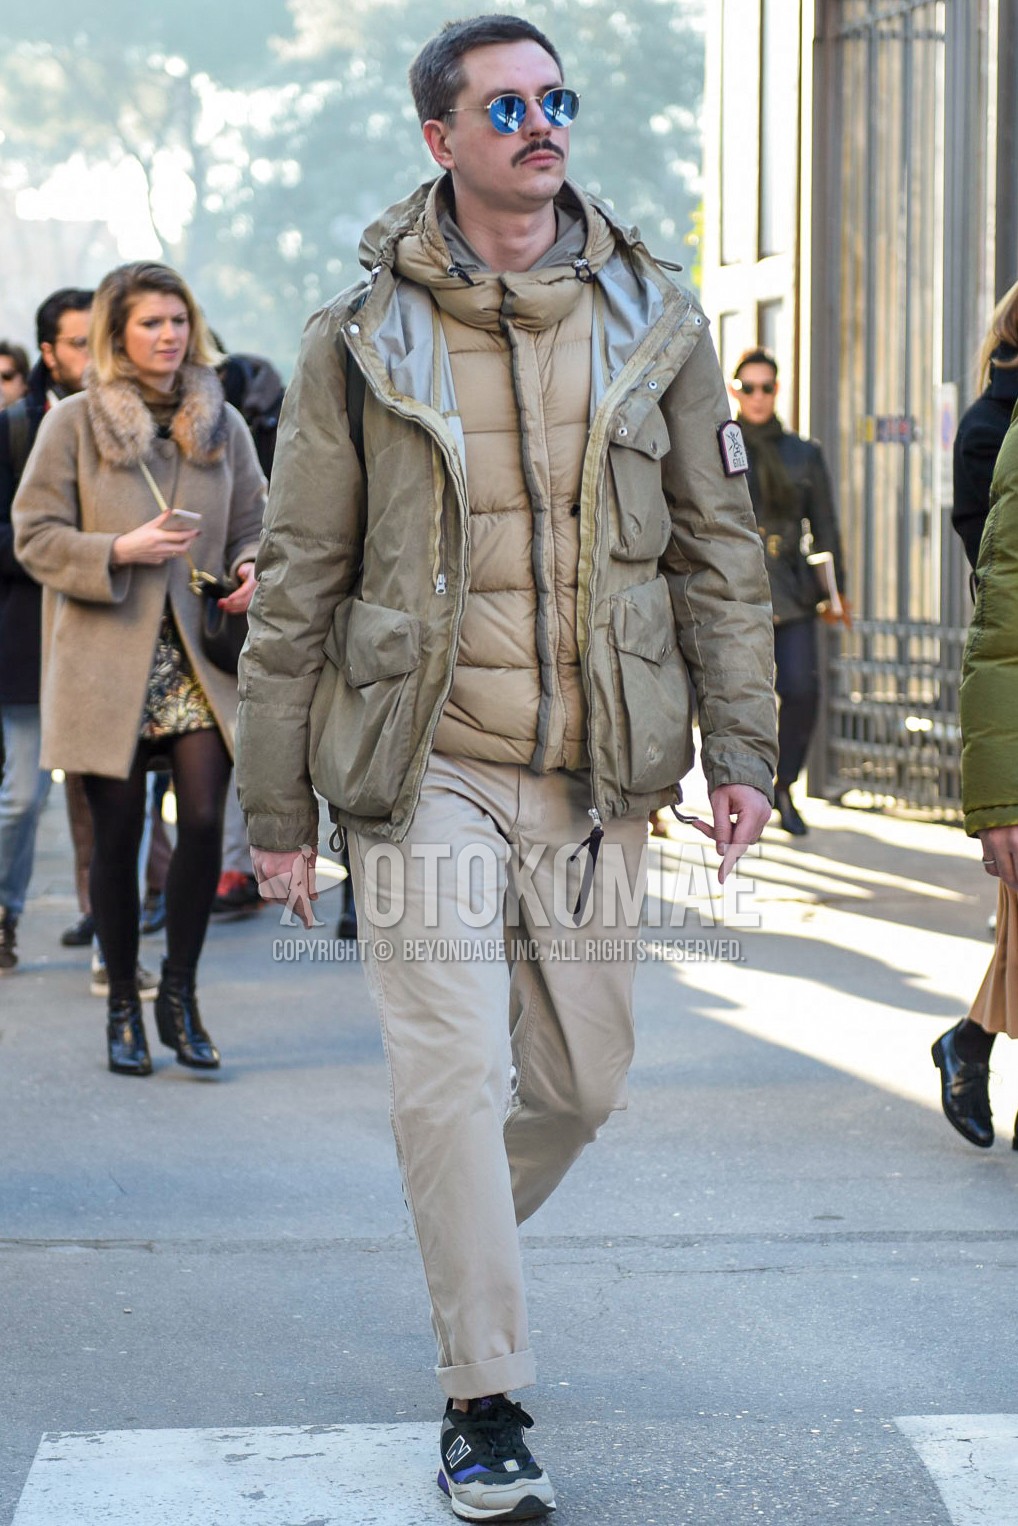 Men's winter outfit with gold plain sunglasses, beige plain field jacket/hunting jacket, beige plain inner down, beige plain chinos, gray low-cut sneakers.